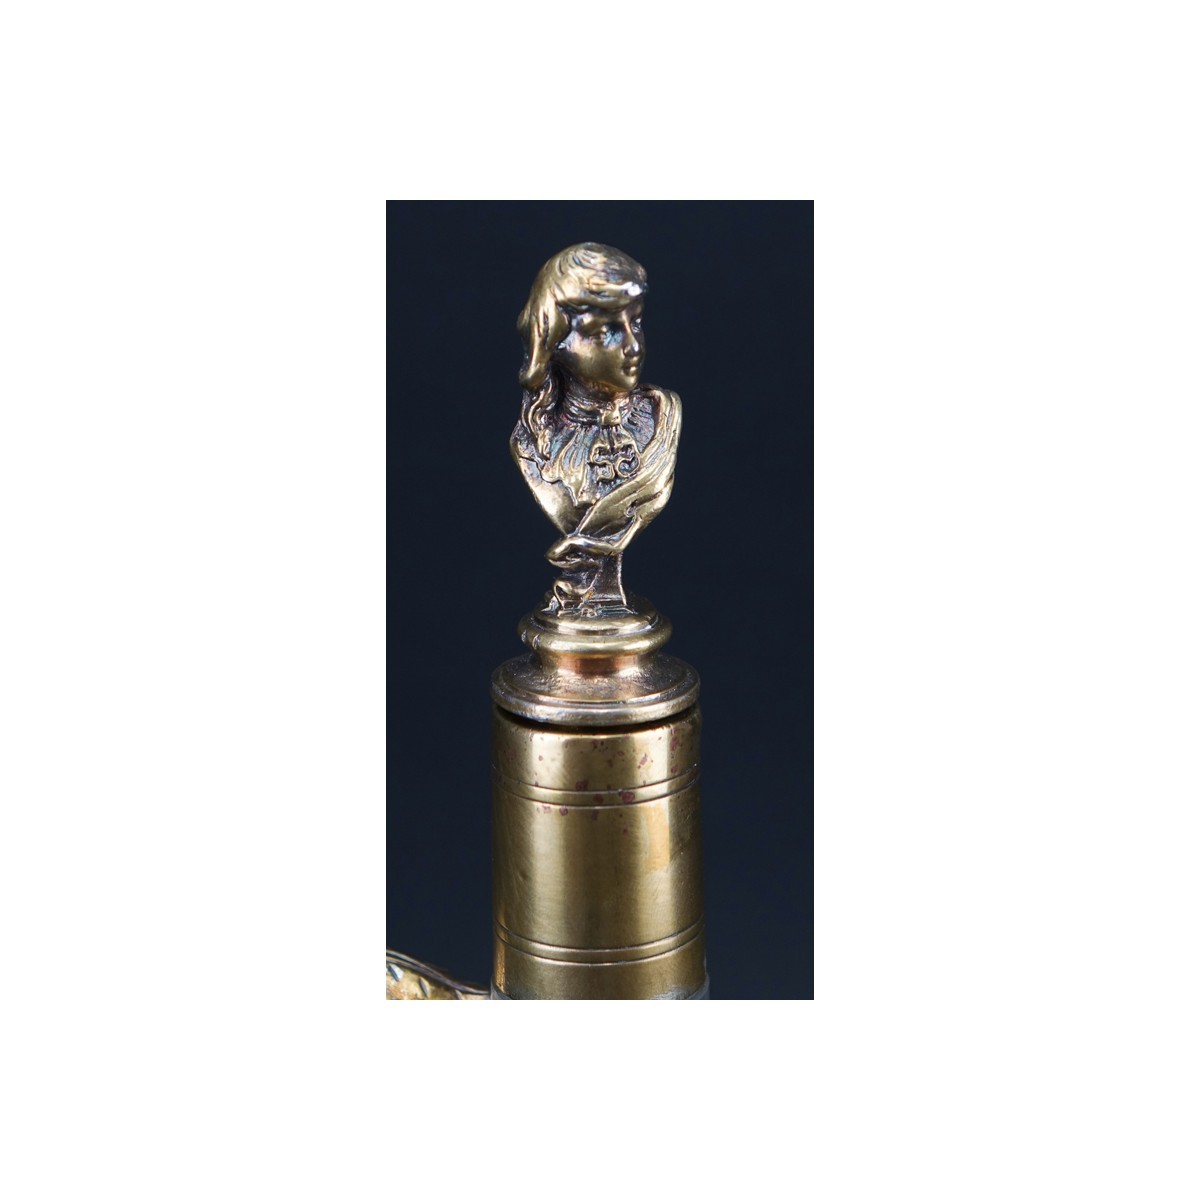 Antique Art Nouveau WMF Vermeil Silver and Glass Figural Cruet Bottle. Signed throughout, monogrammed to top.